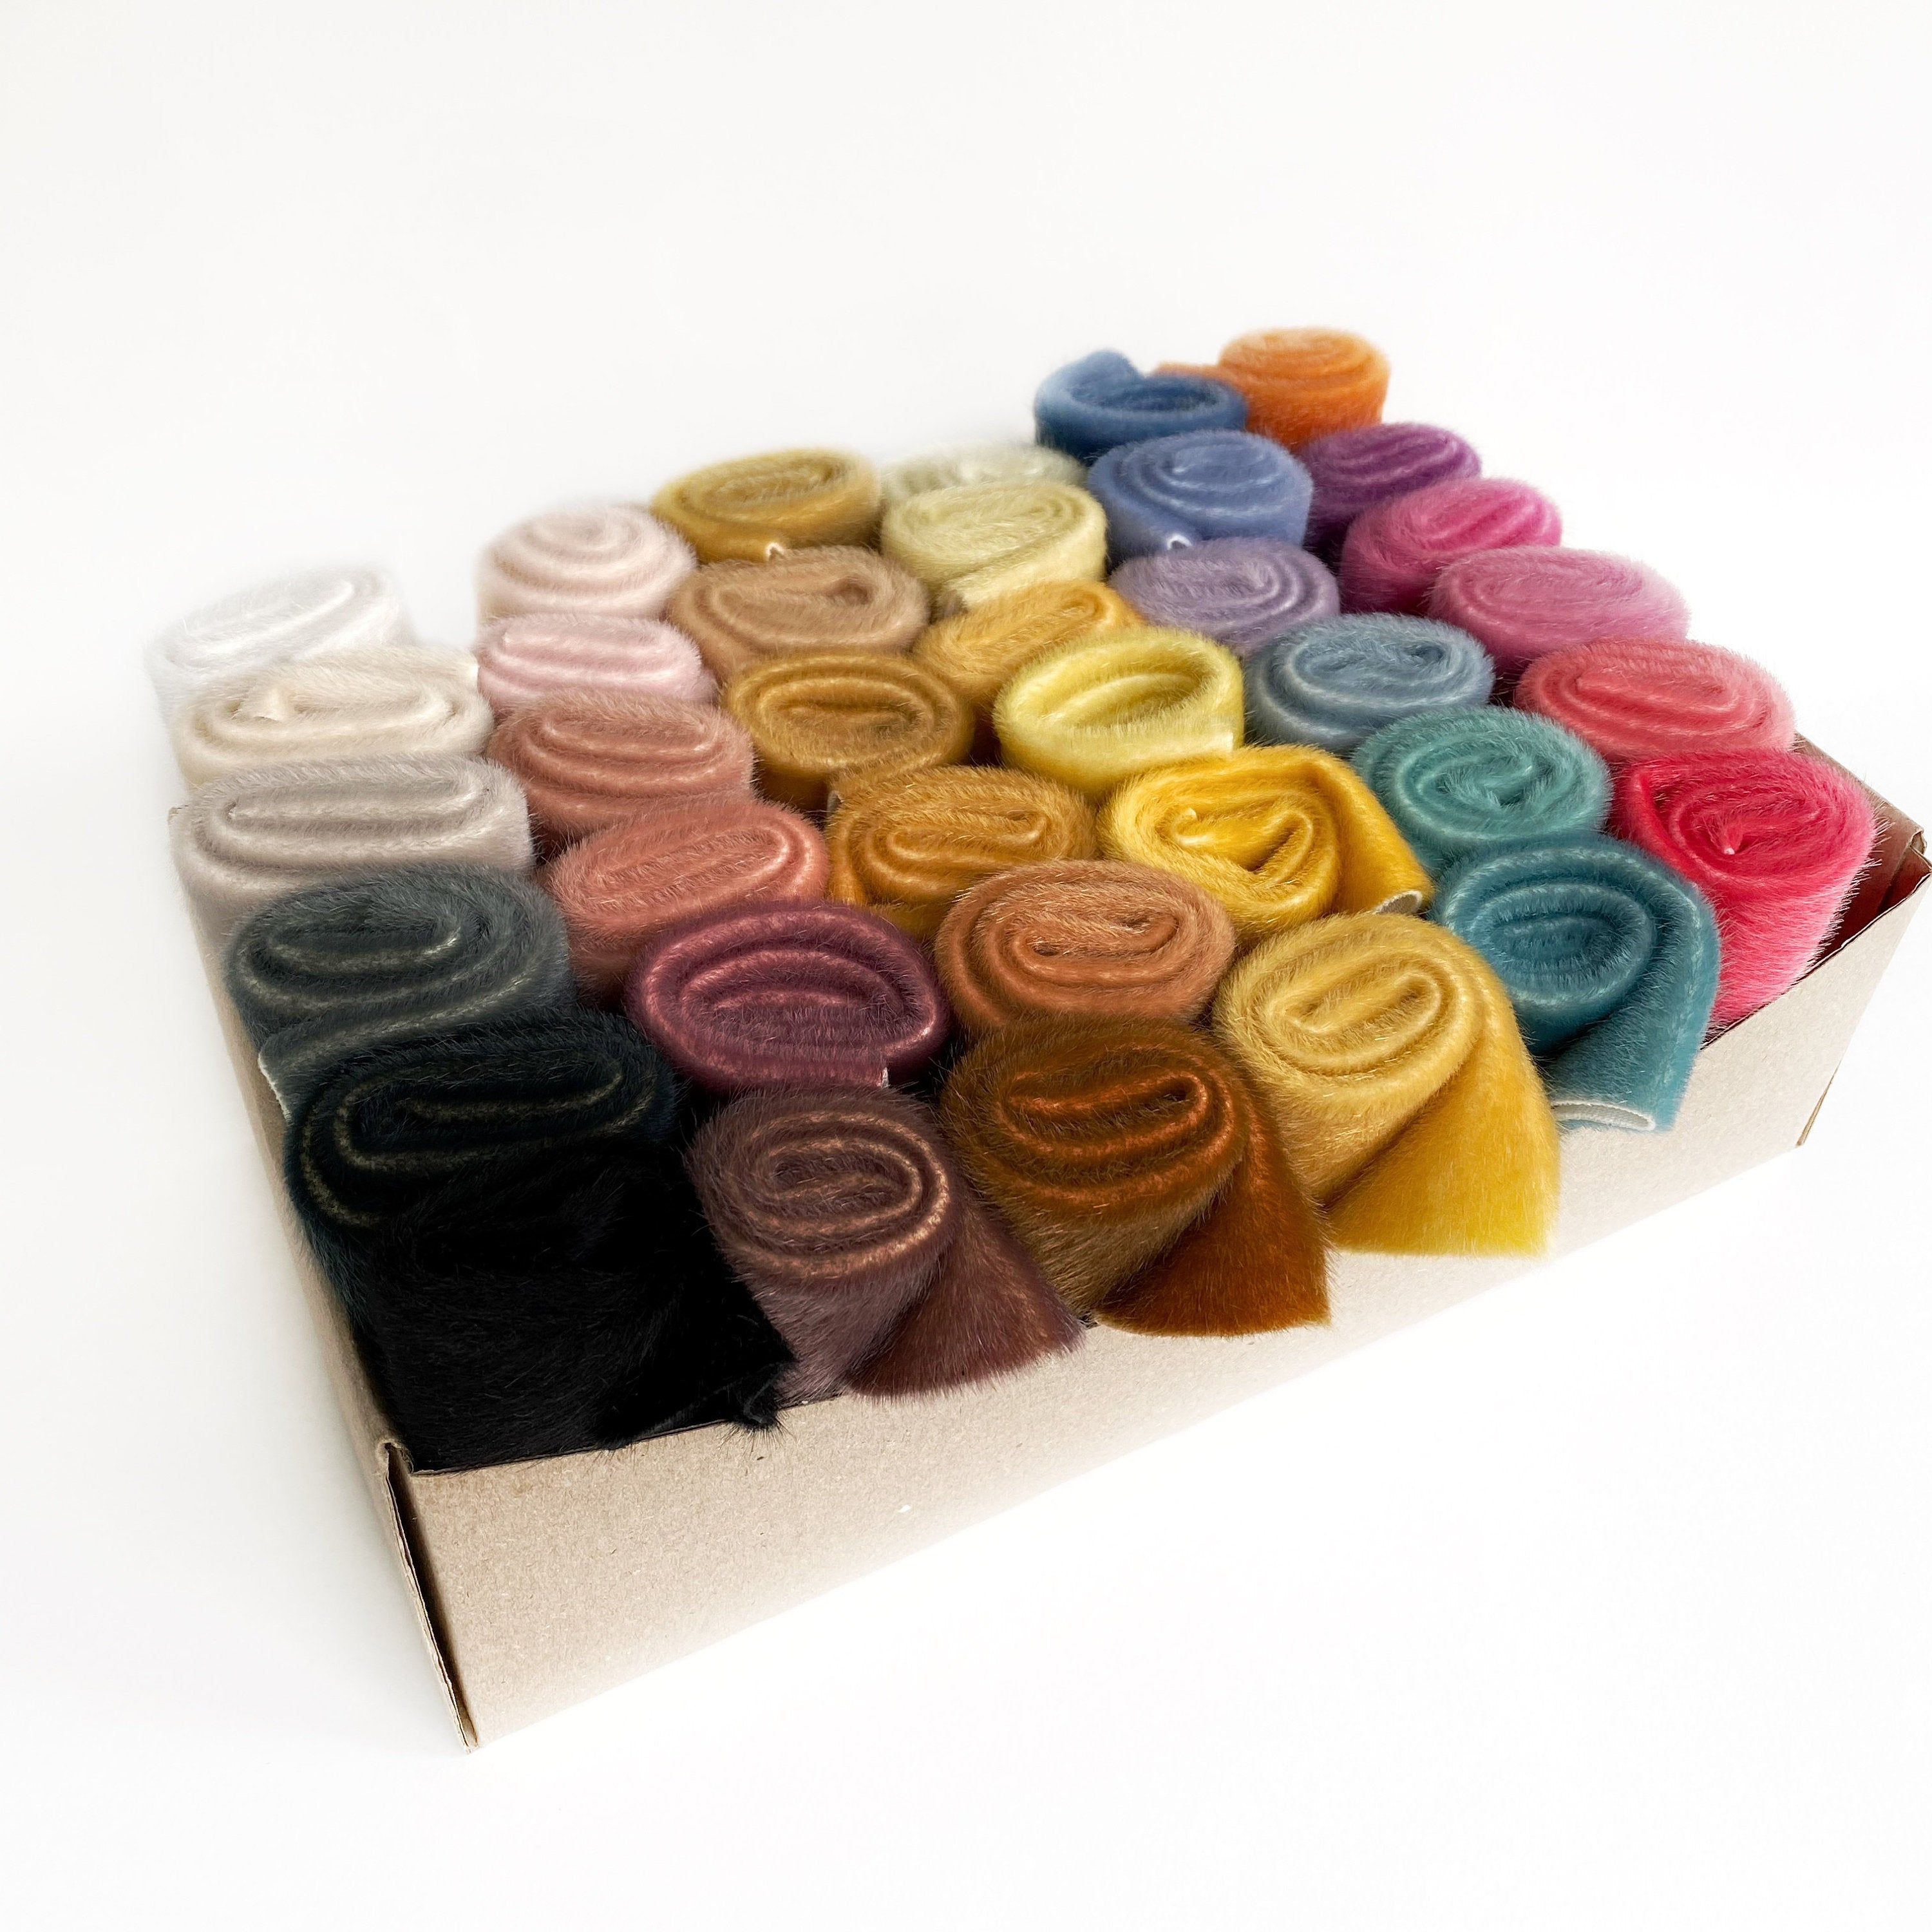 Magic box of 36 the most popular color fabrics (International)